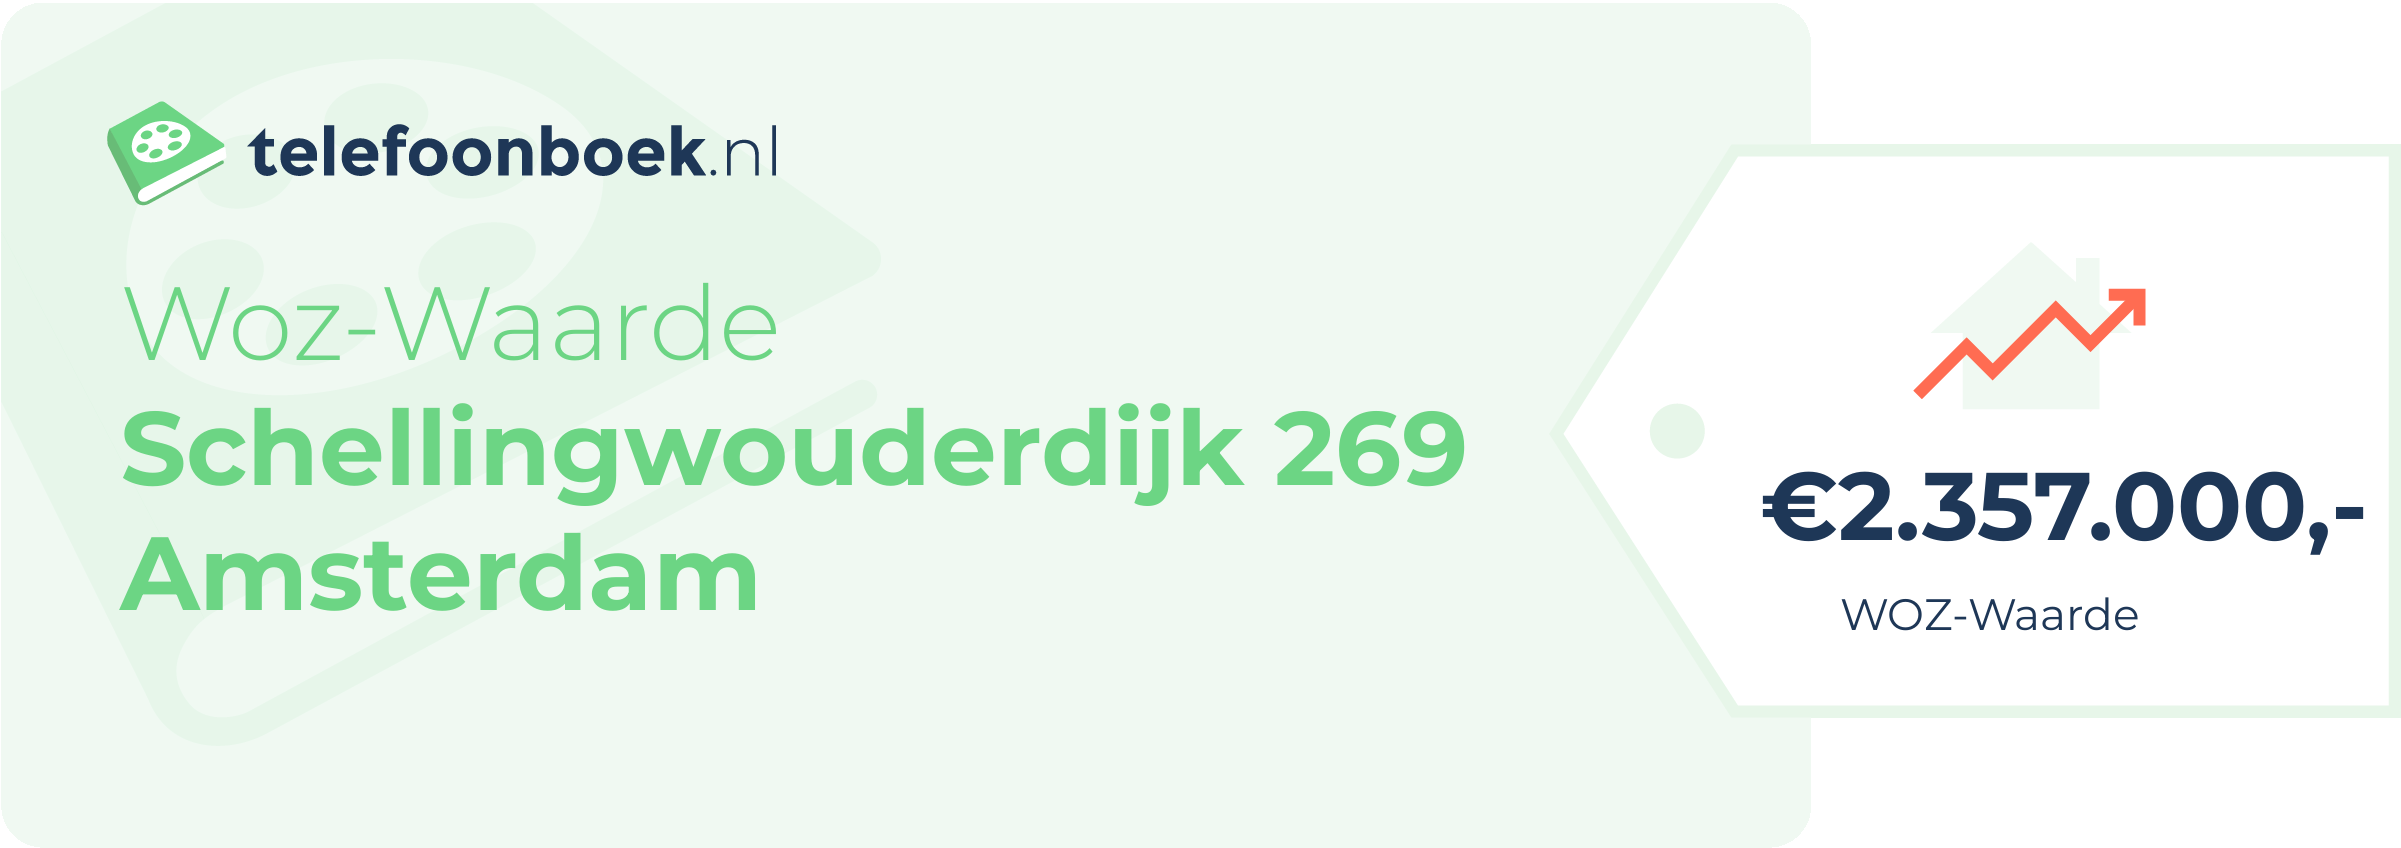 WOZ-waarde Schellingwouderdijk 269 Amsterdam